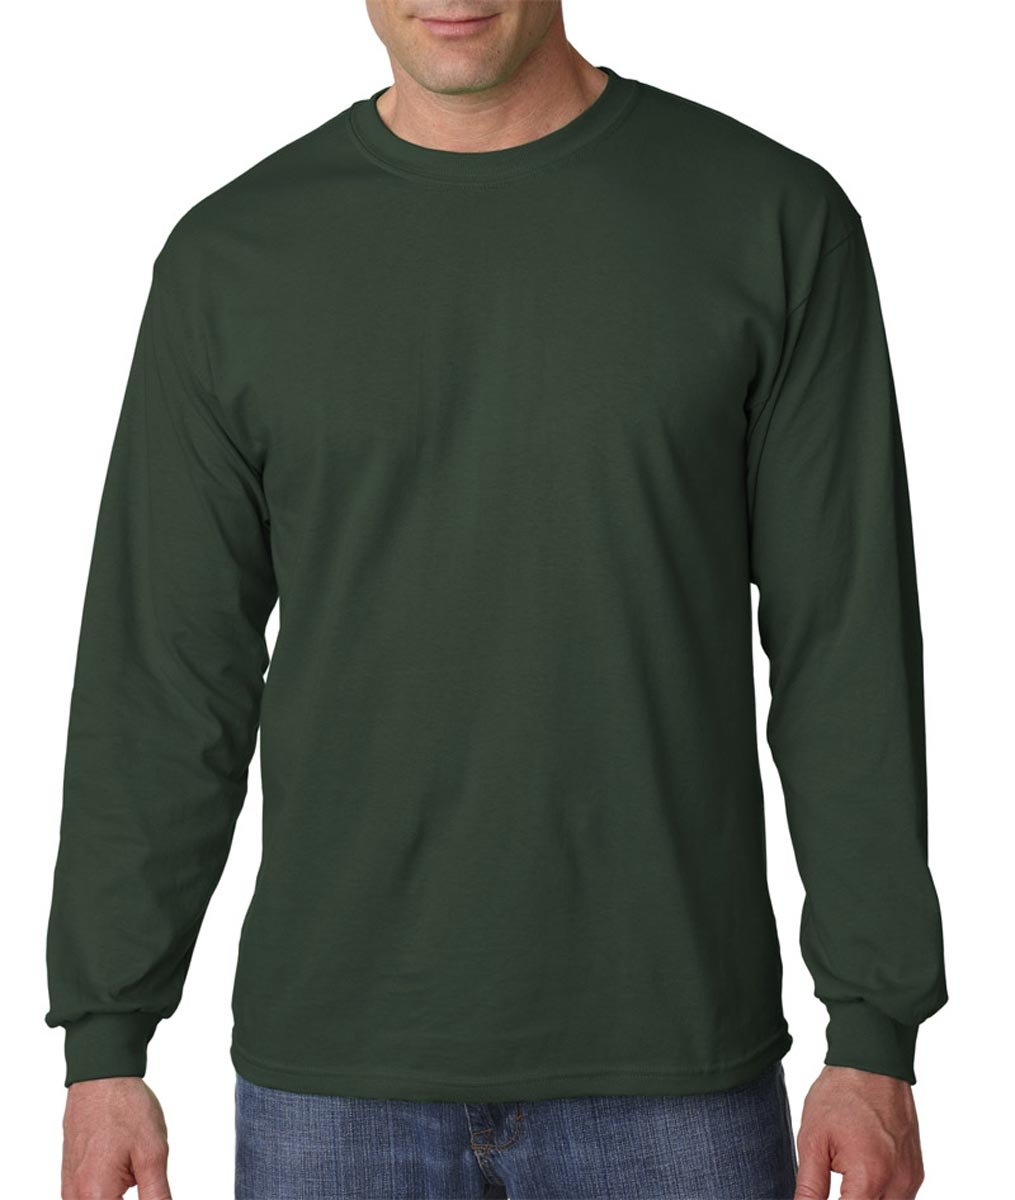 Gildan Heavy Cotton 100% Cotton Long Sleeve T-Shirt.